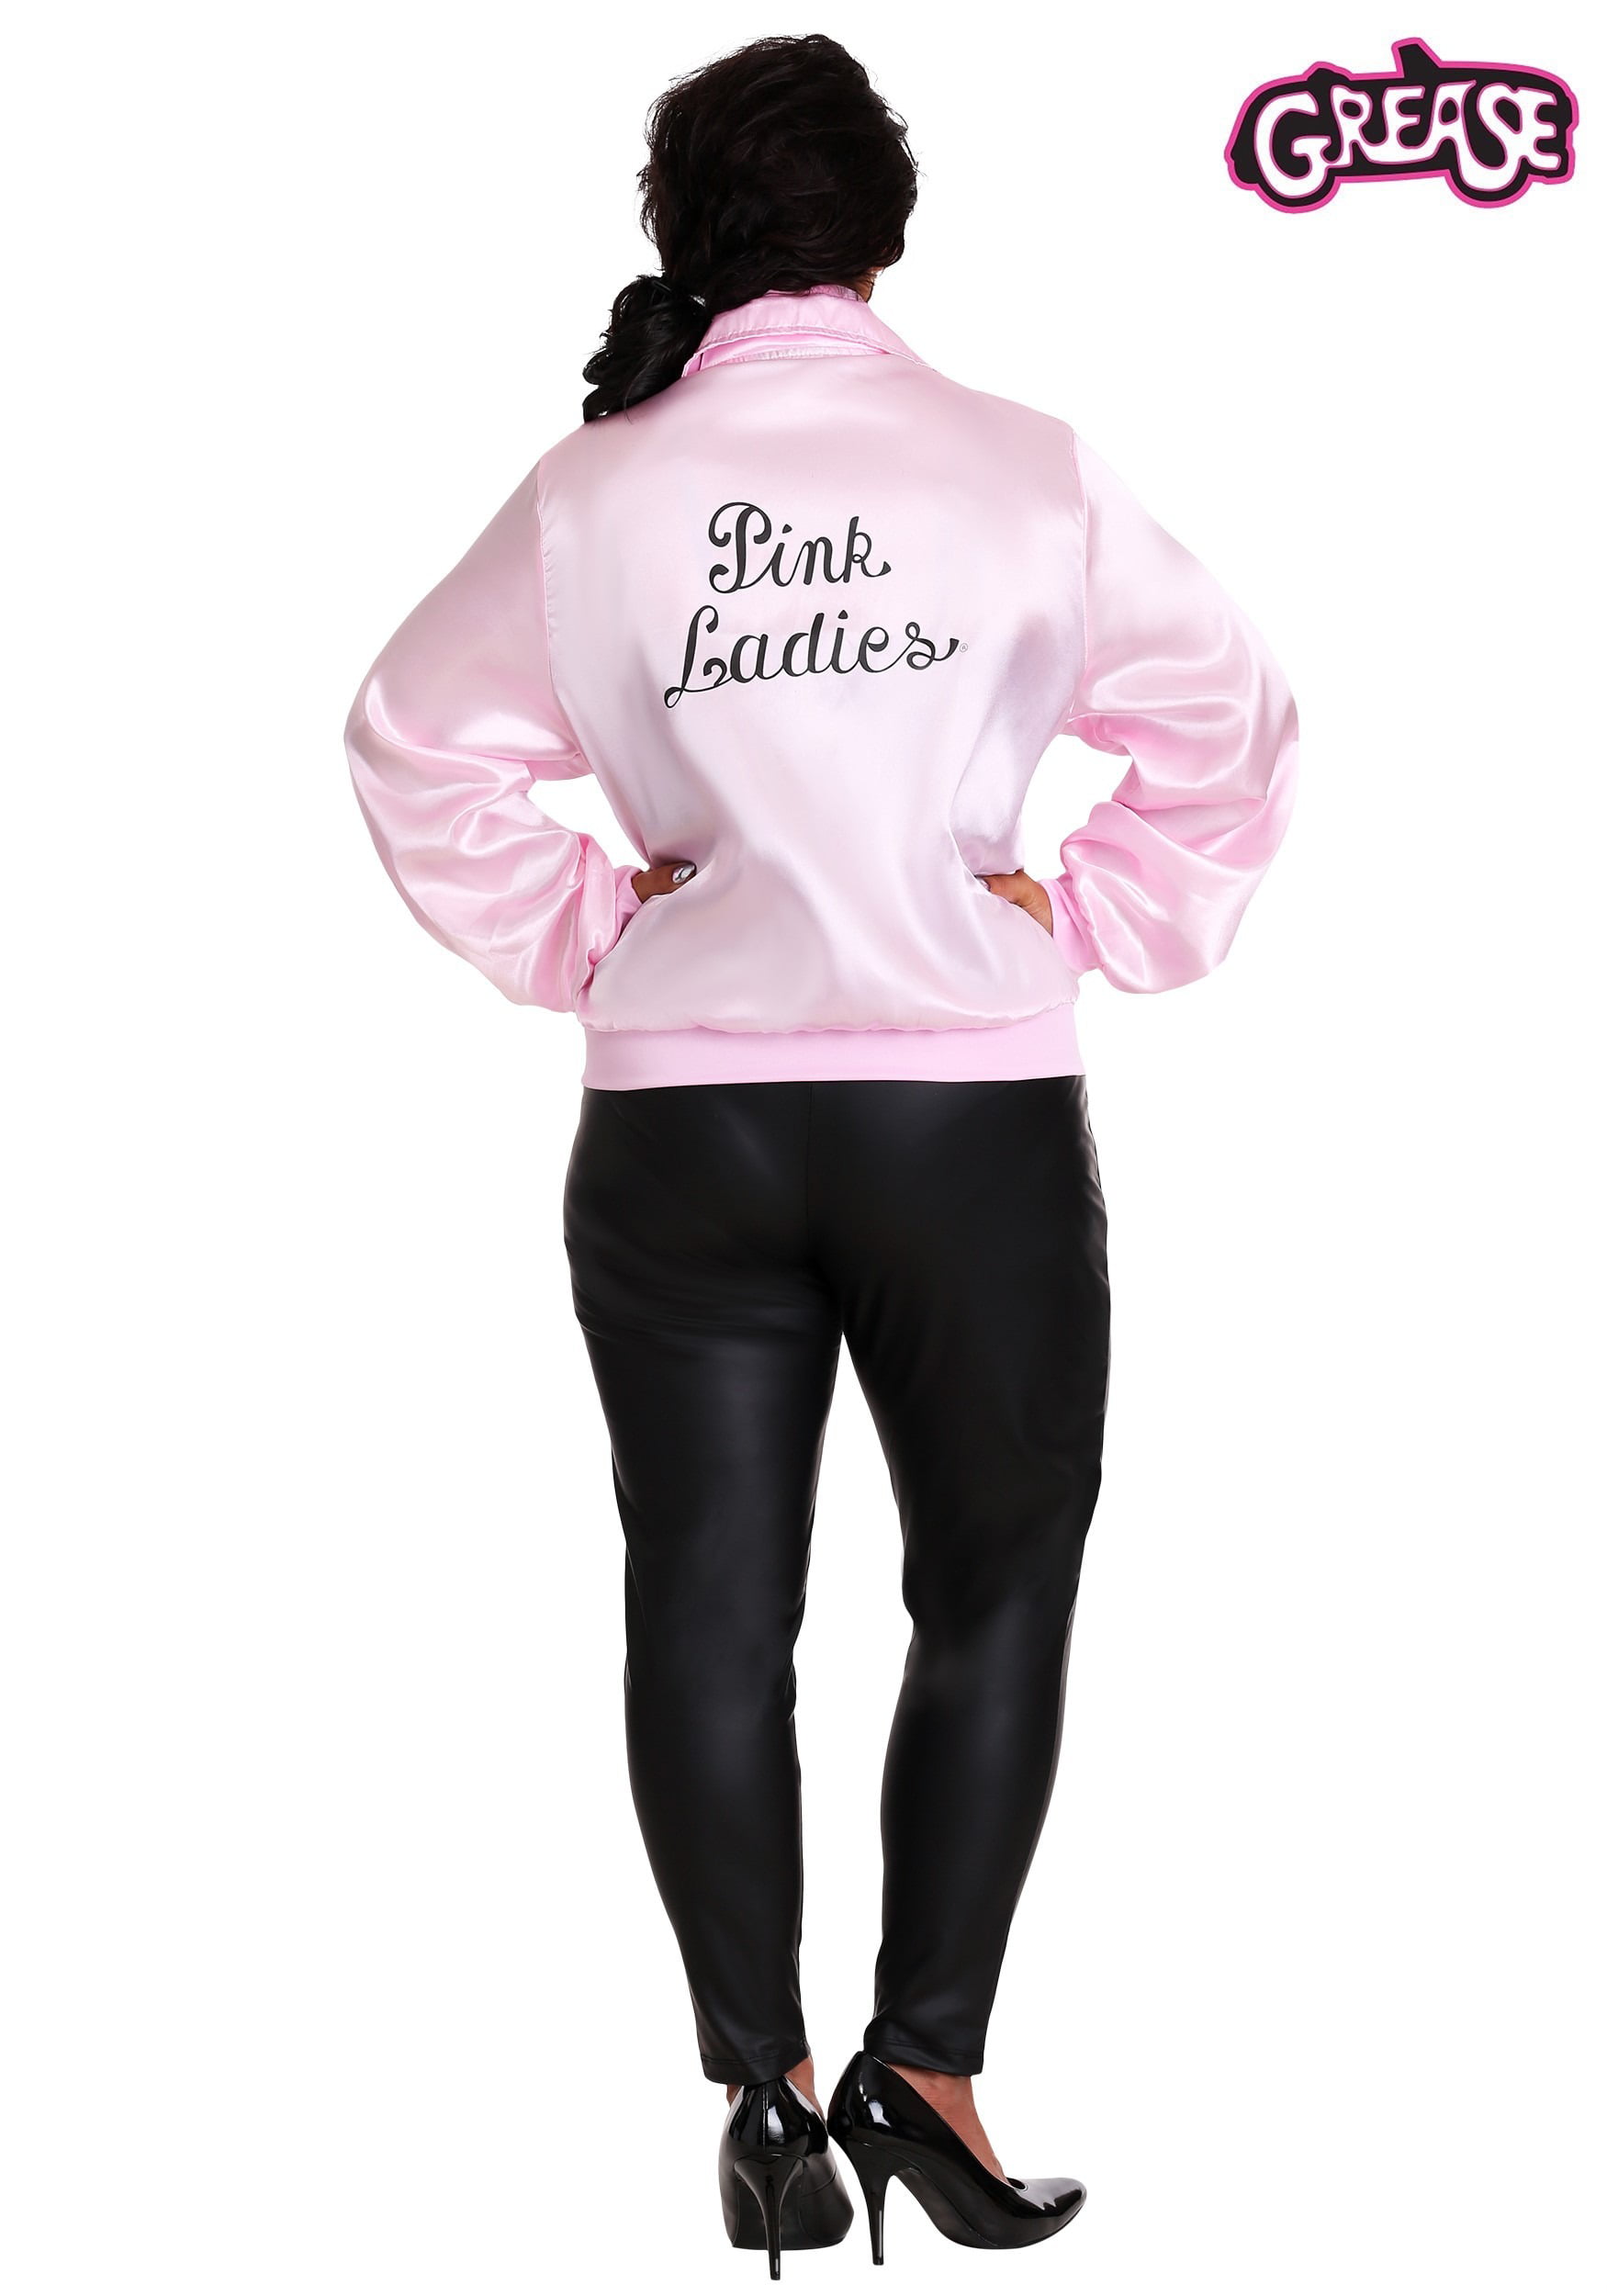 Grease Plus Size Pink Ladies Costume Jacket - Walmart.com